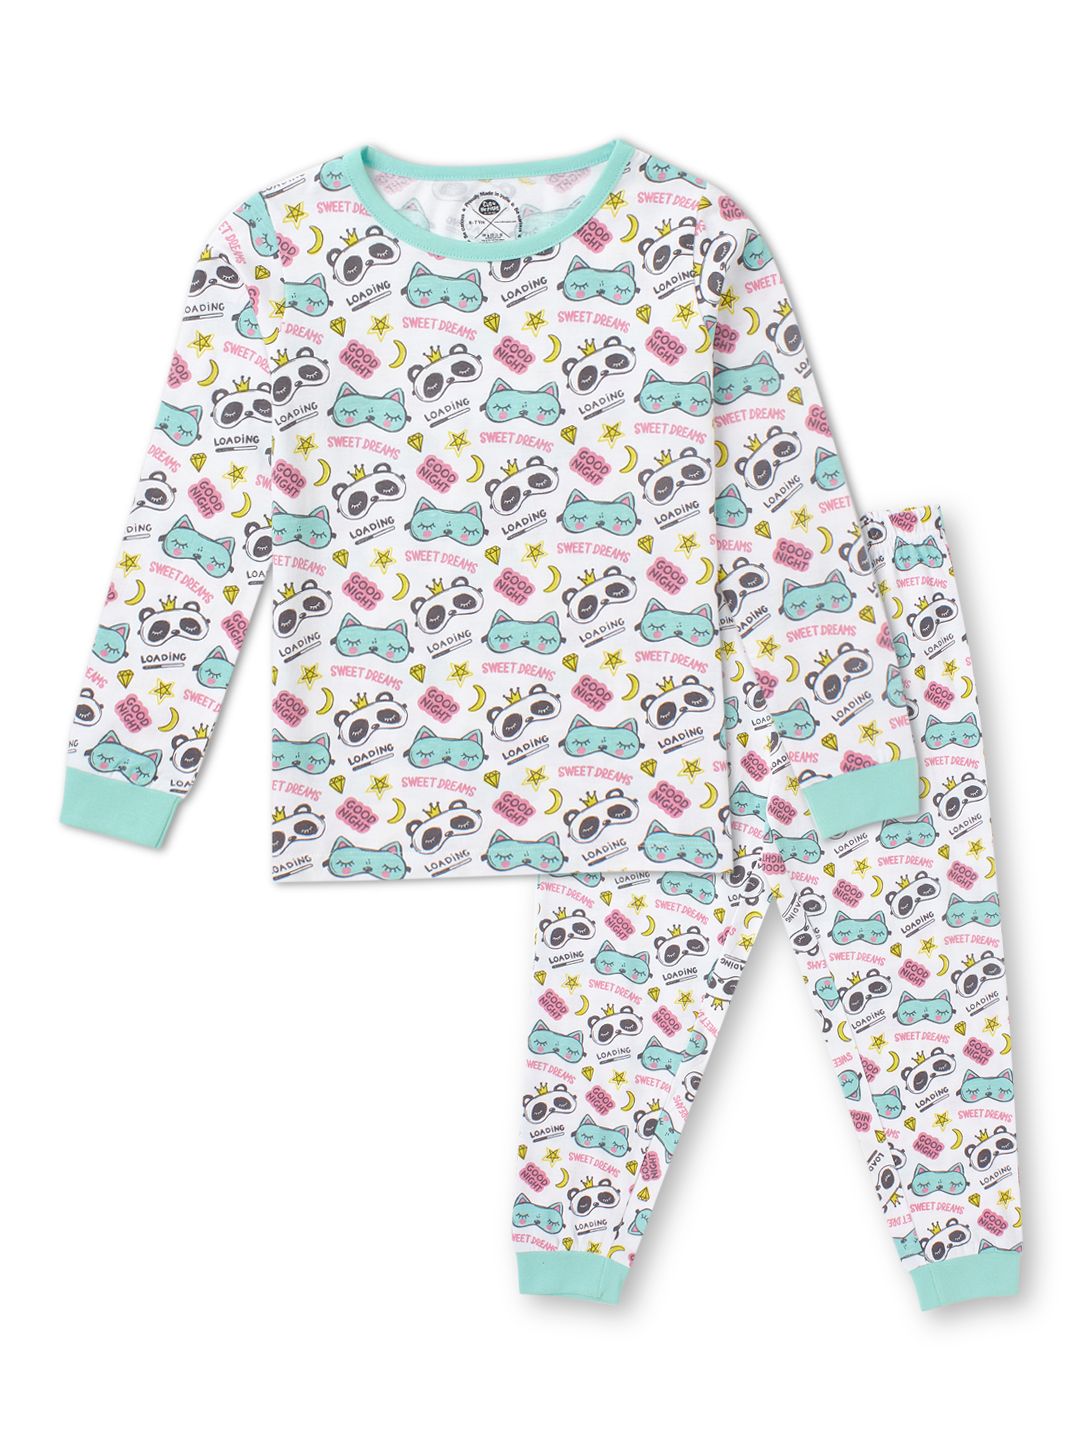 Cub McPaws Girls Sleepwear |100% Cotton kids night dress set